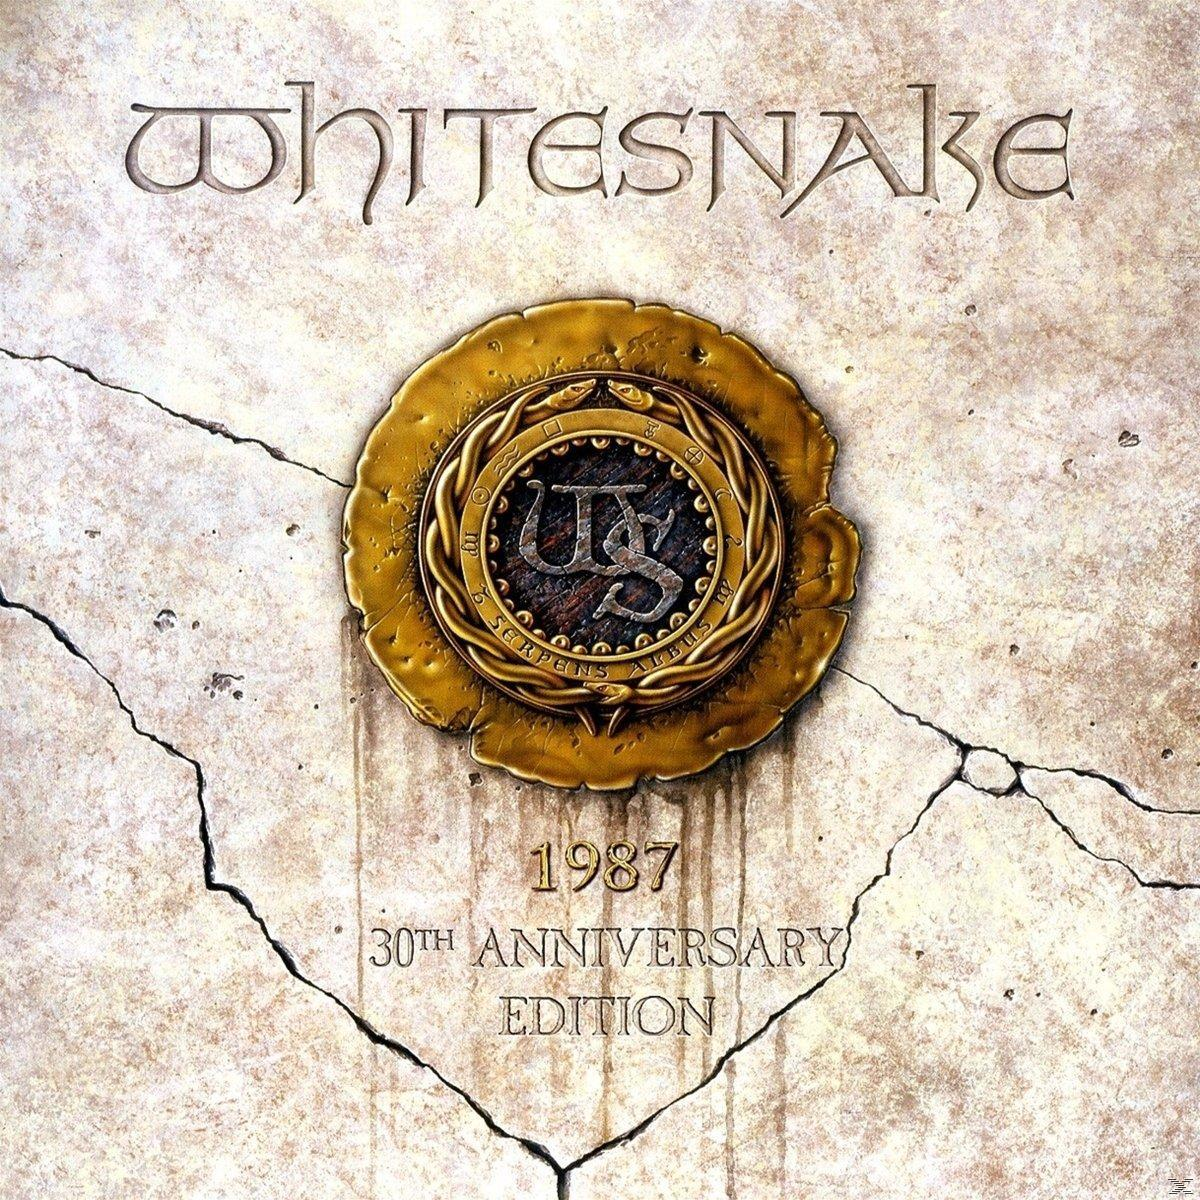 Whitesnake - 1987 (30th Anniversary (Vinyl) Edition) 